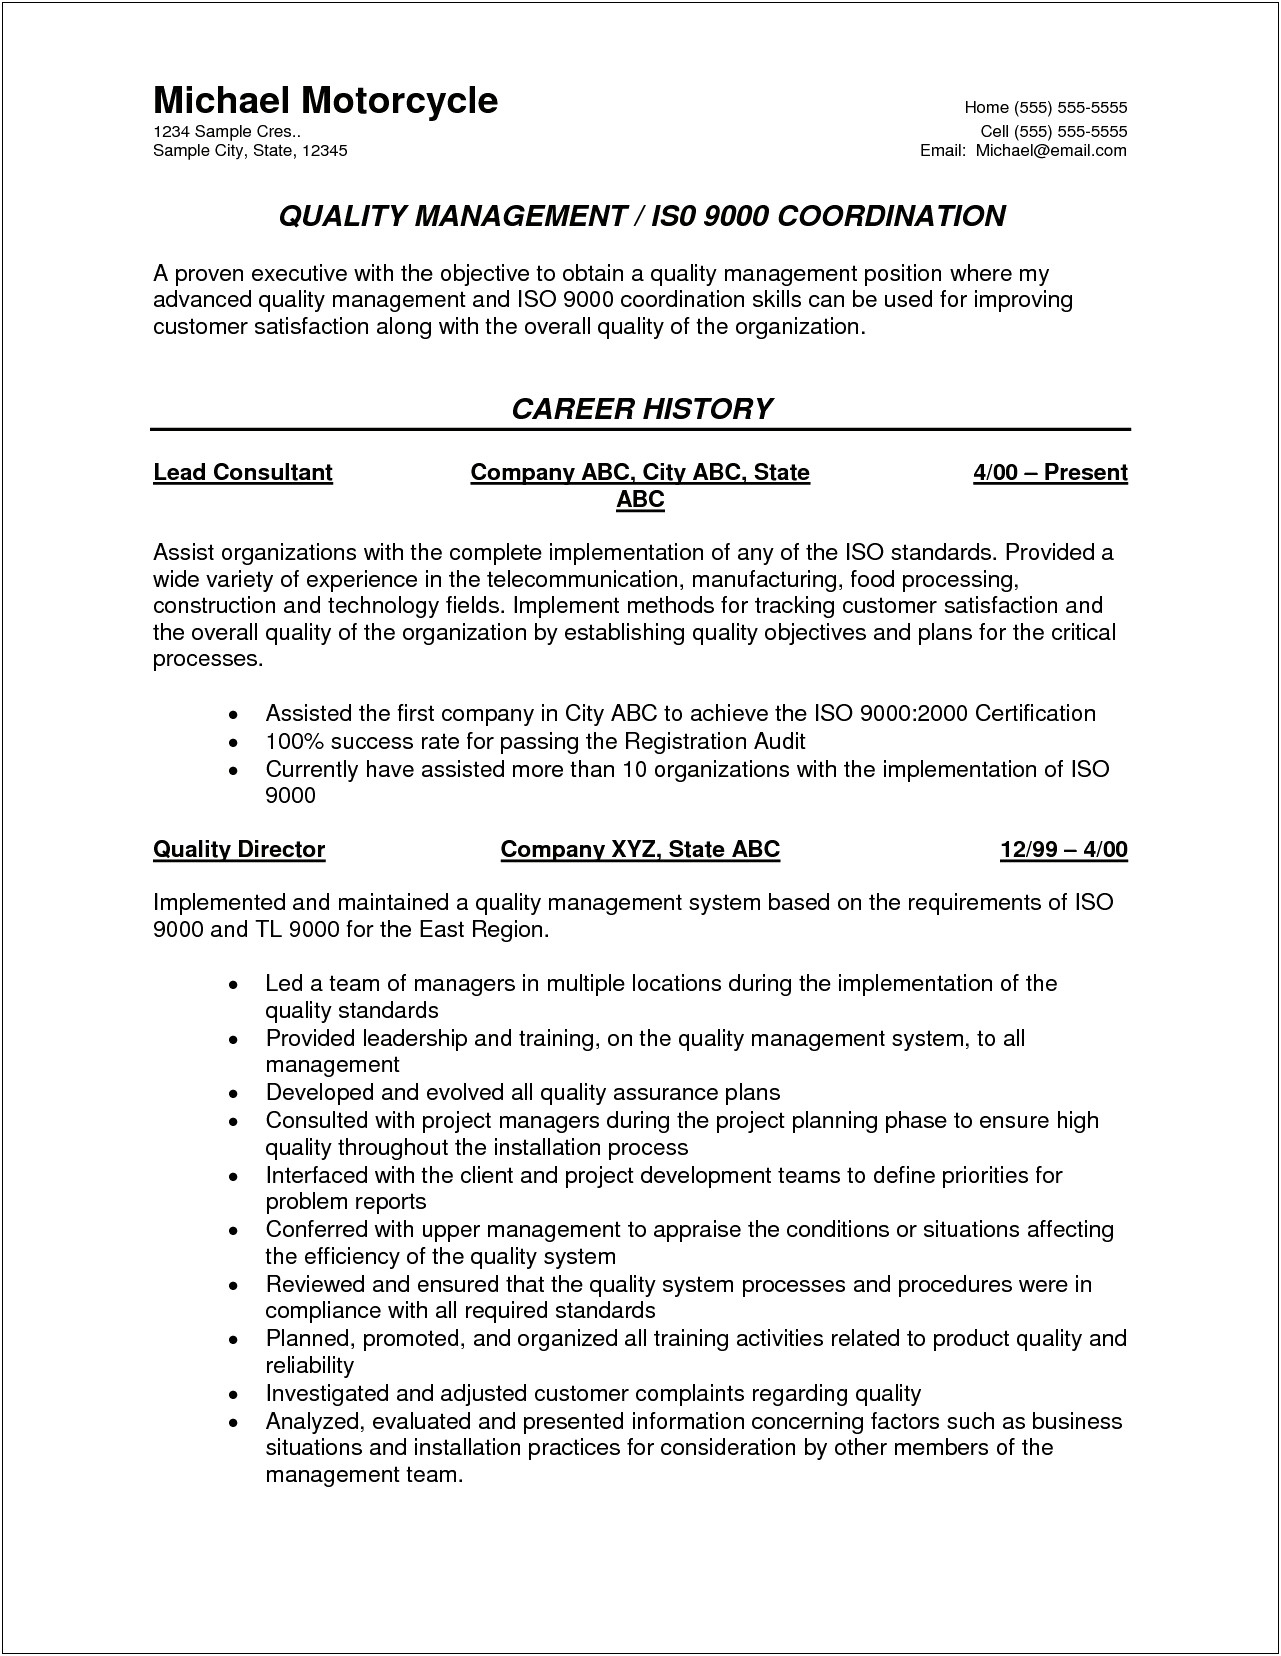 Quality Control Plan Sample Resume